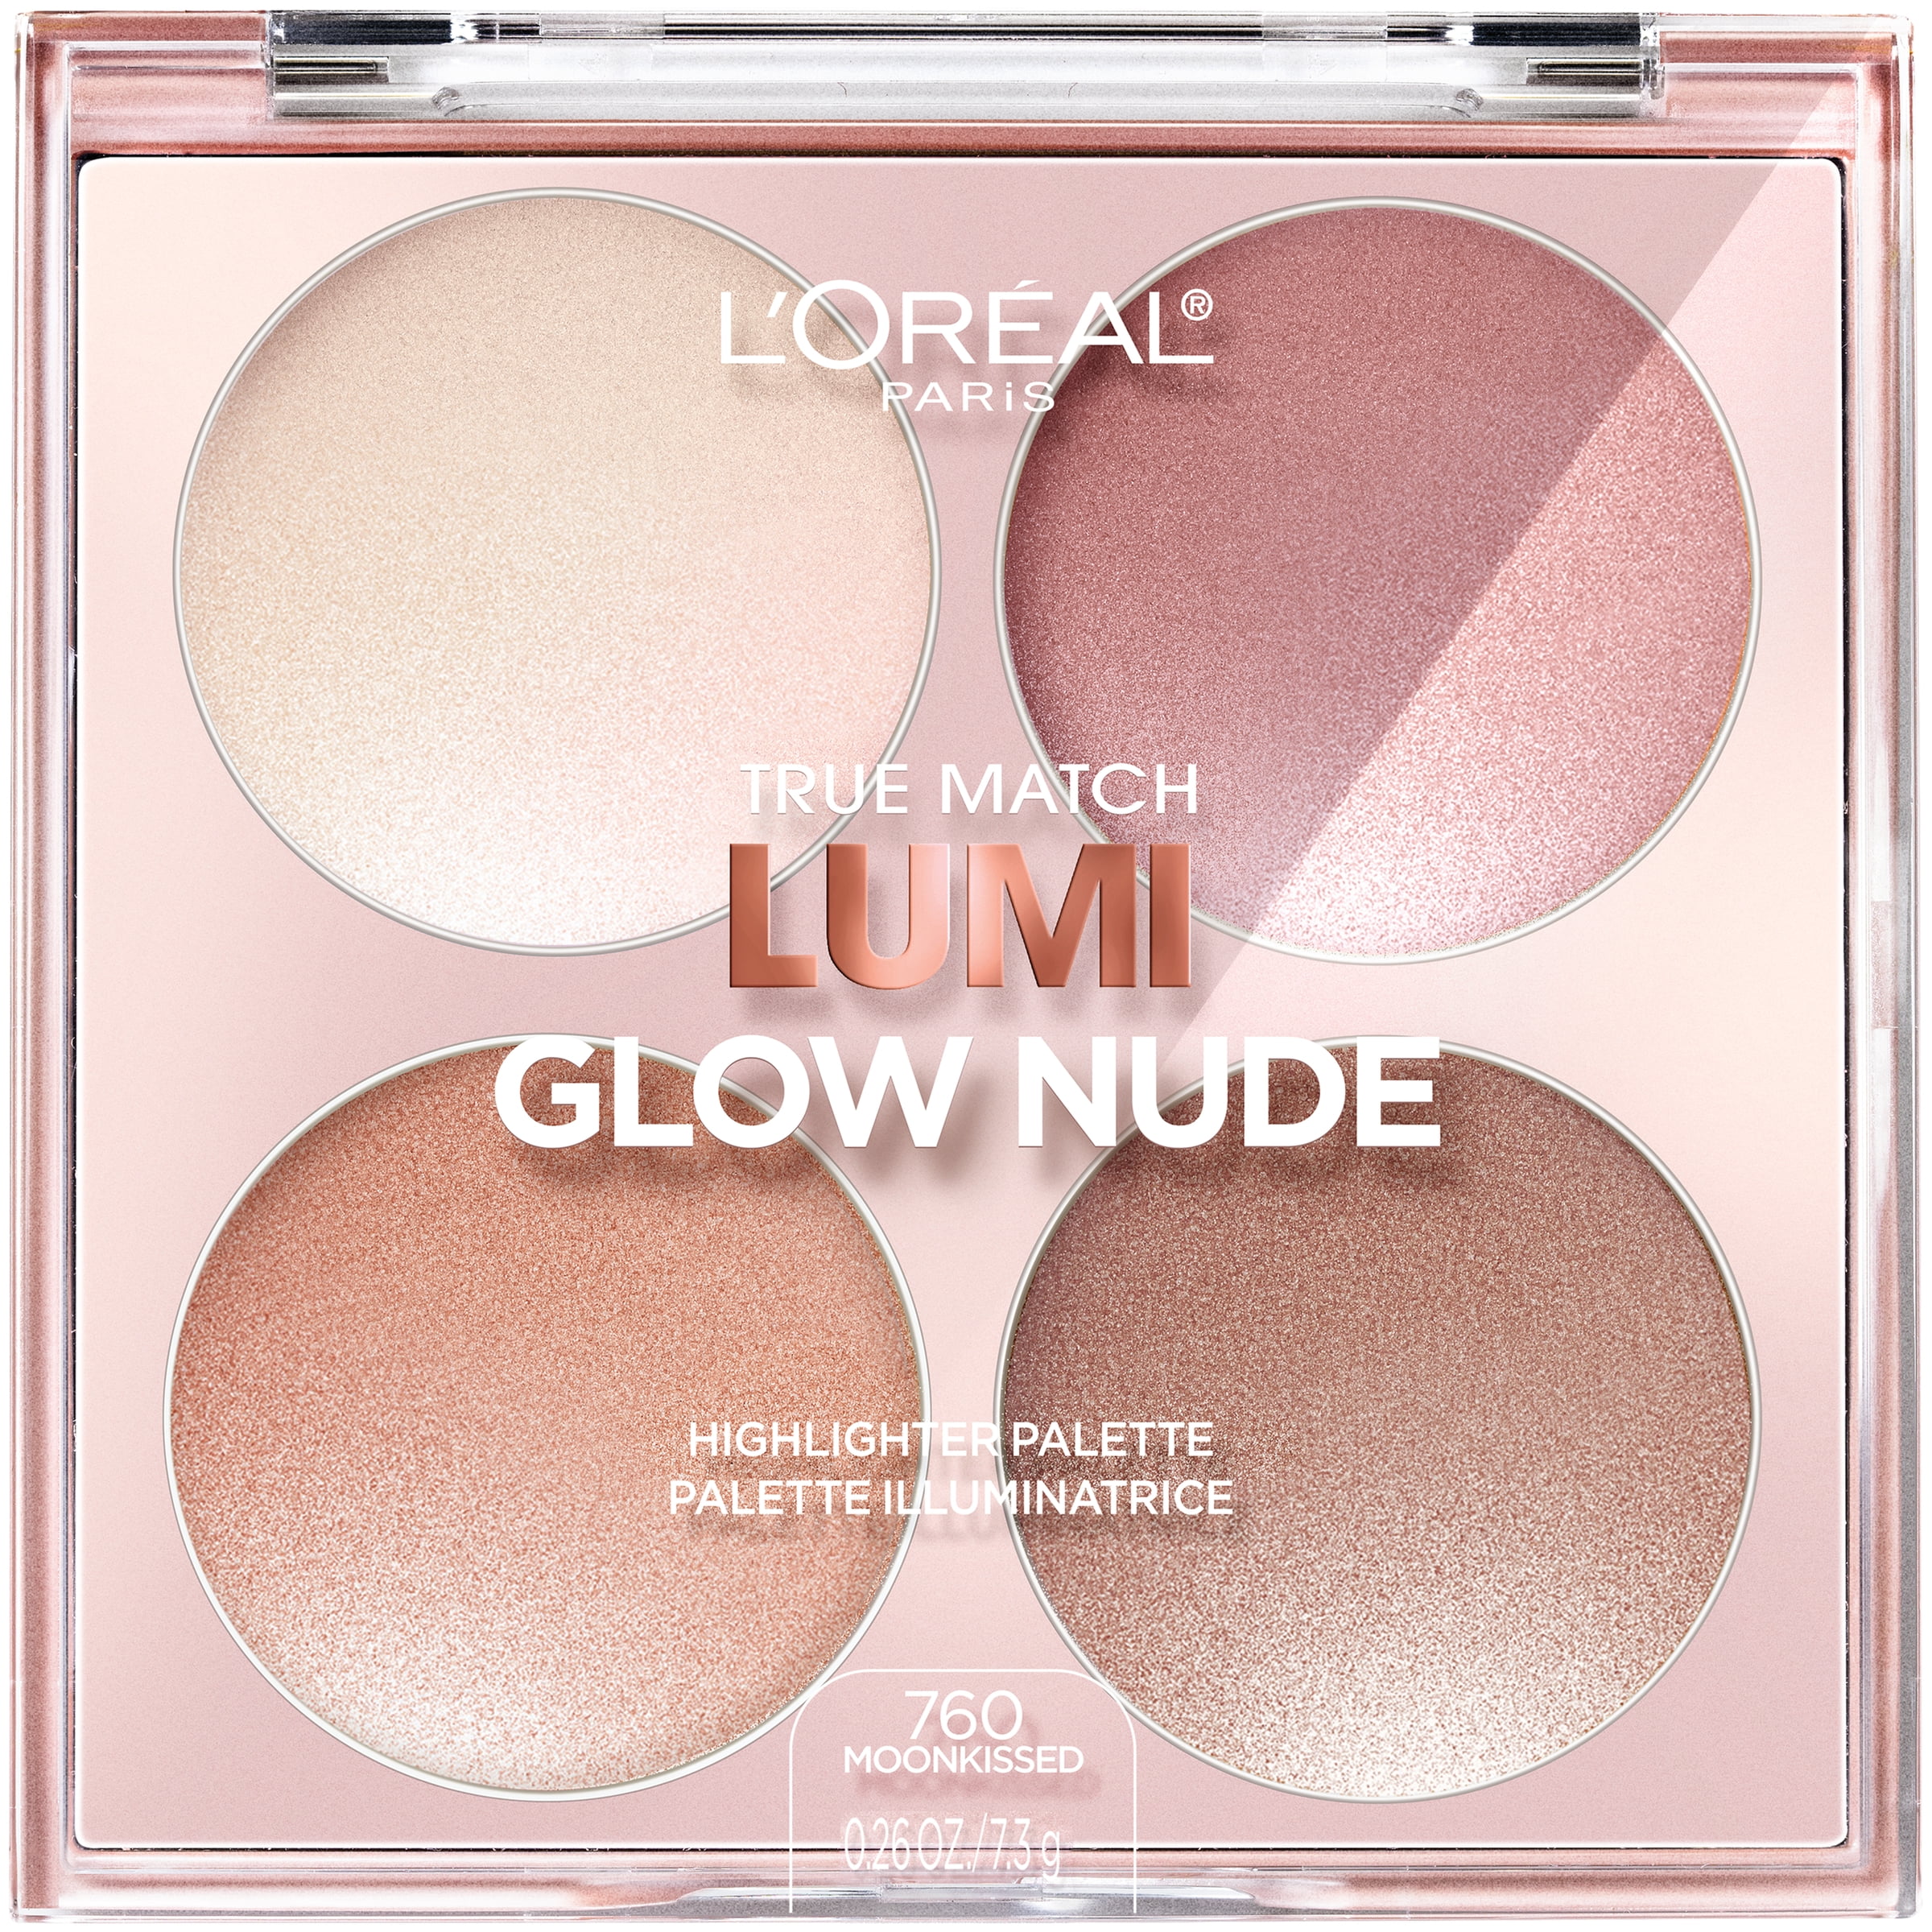 L'Oreal True Match Lumi Glow Nude Highlighter Palette, Moonkissed, 0.26 oz - Walmart.com